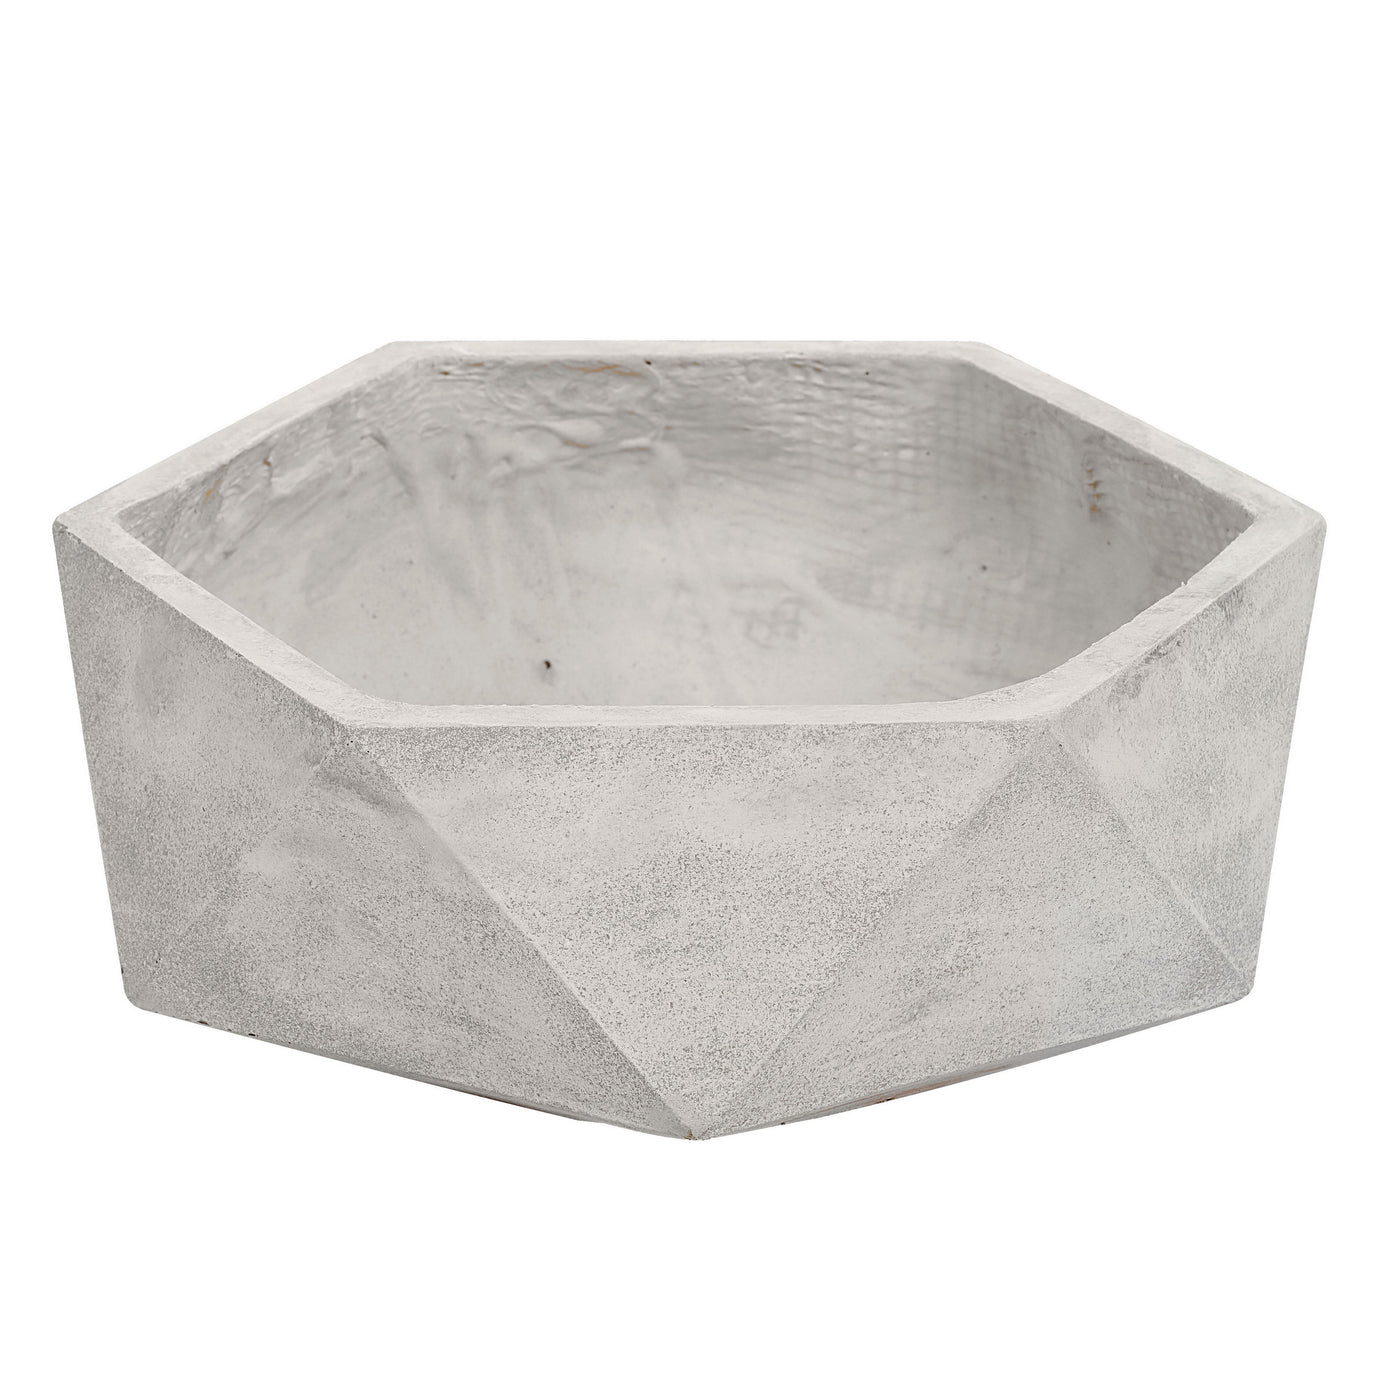 High-quality hexagonal stonecast pot in light grey